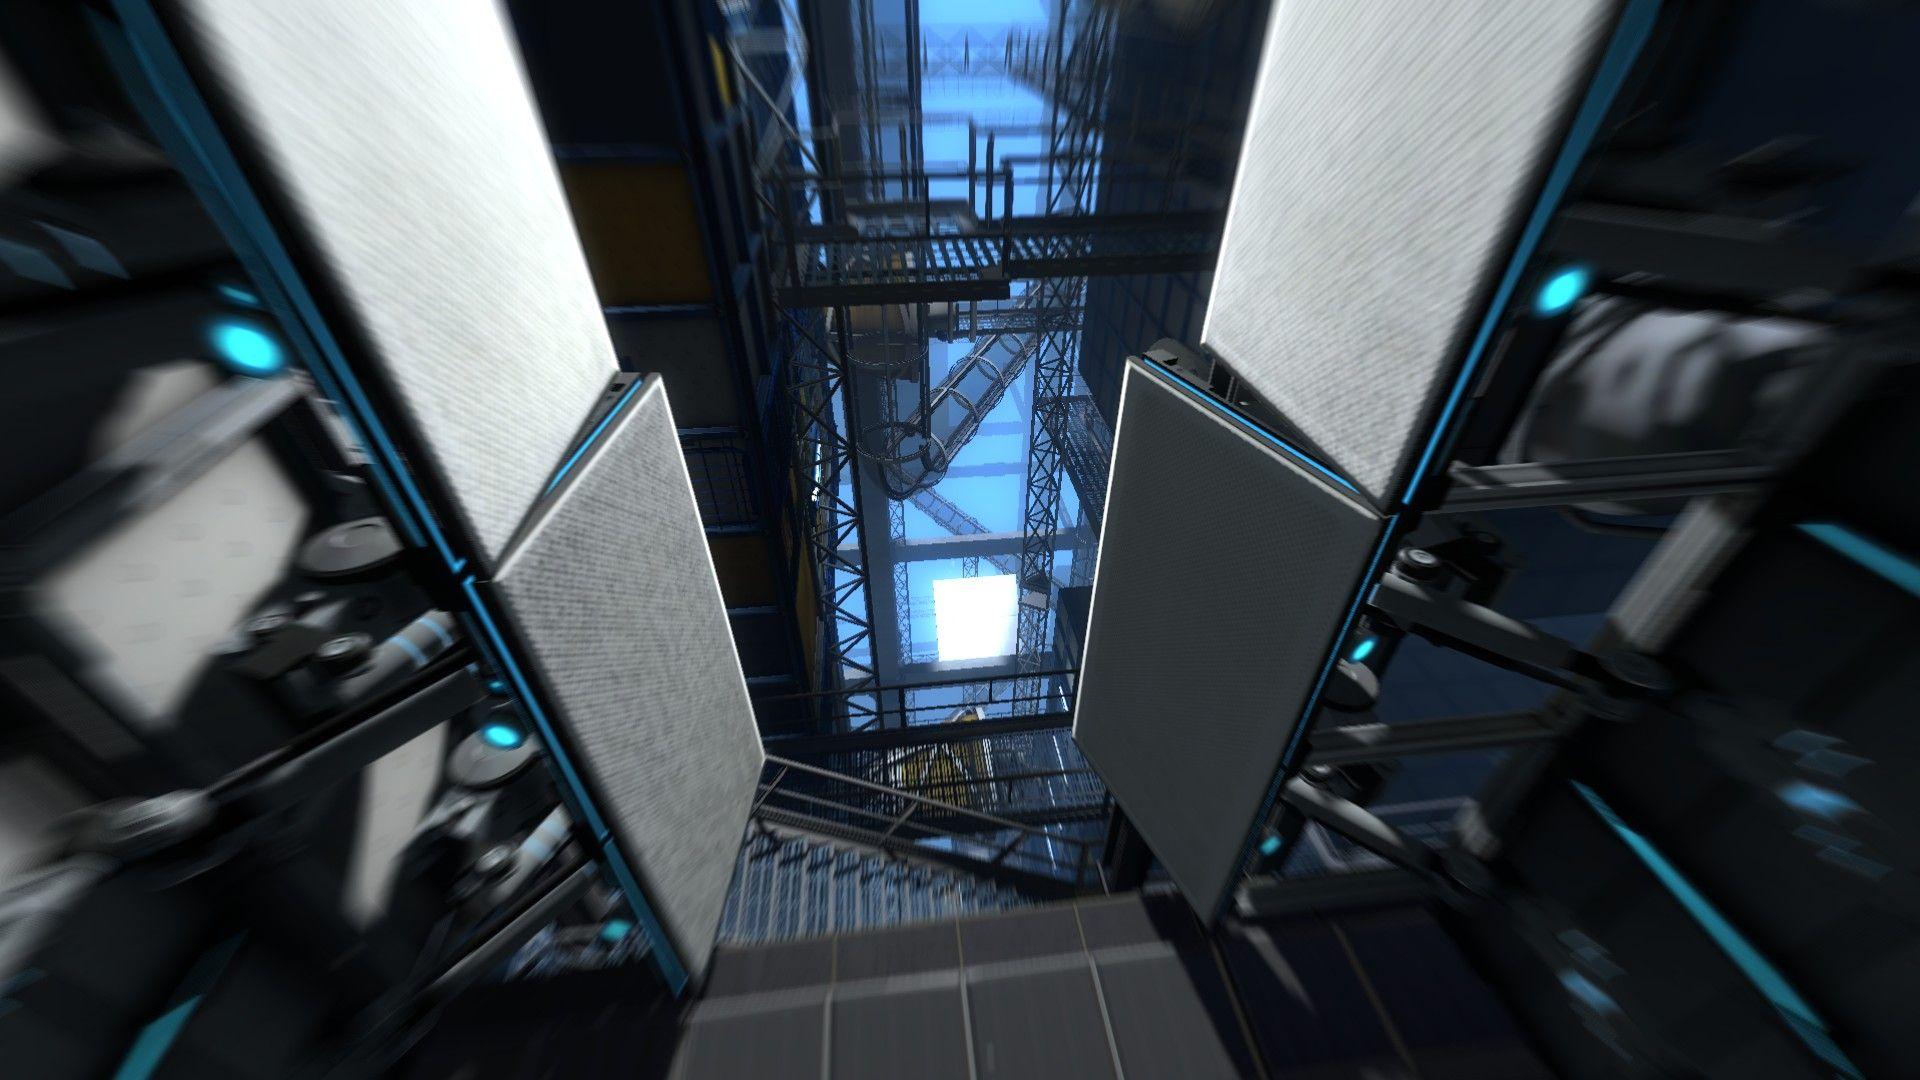 Screenshot №4 from game Portal 2